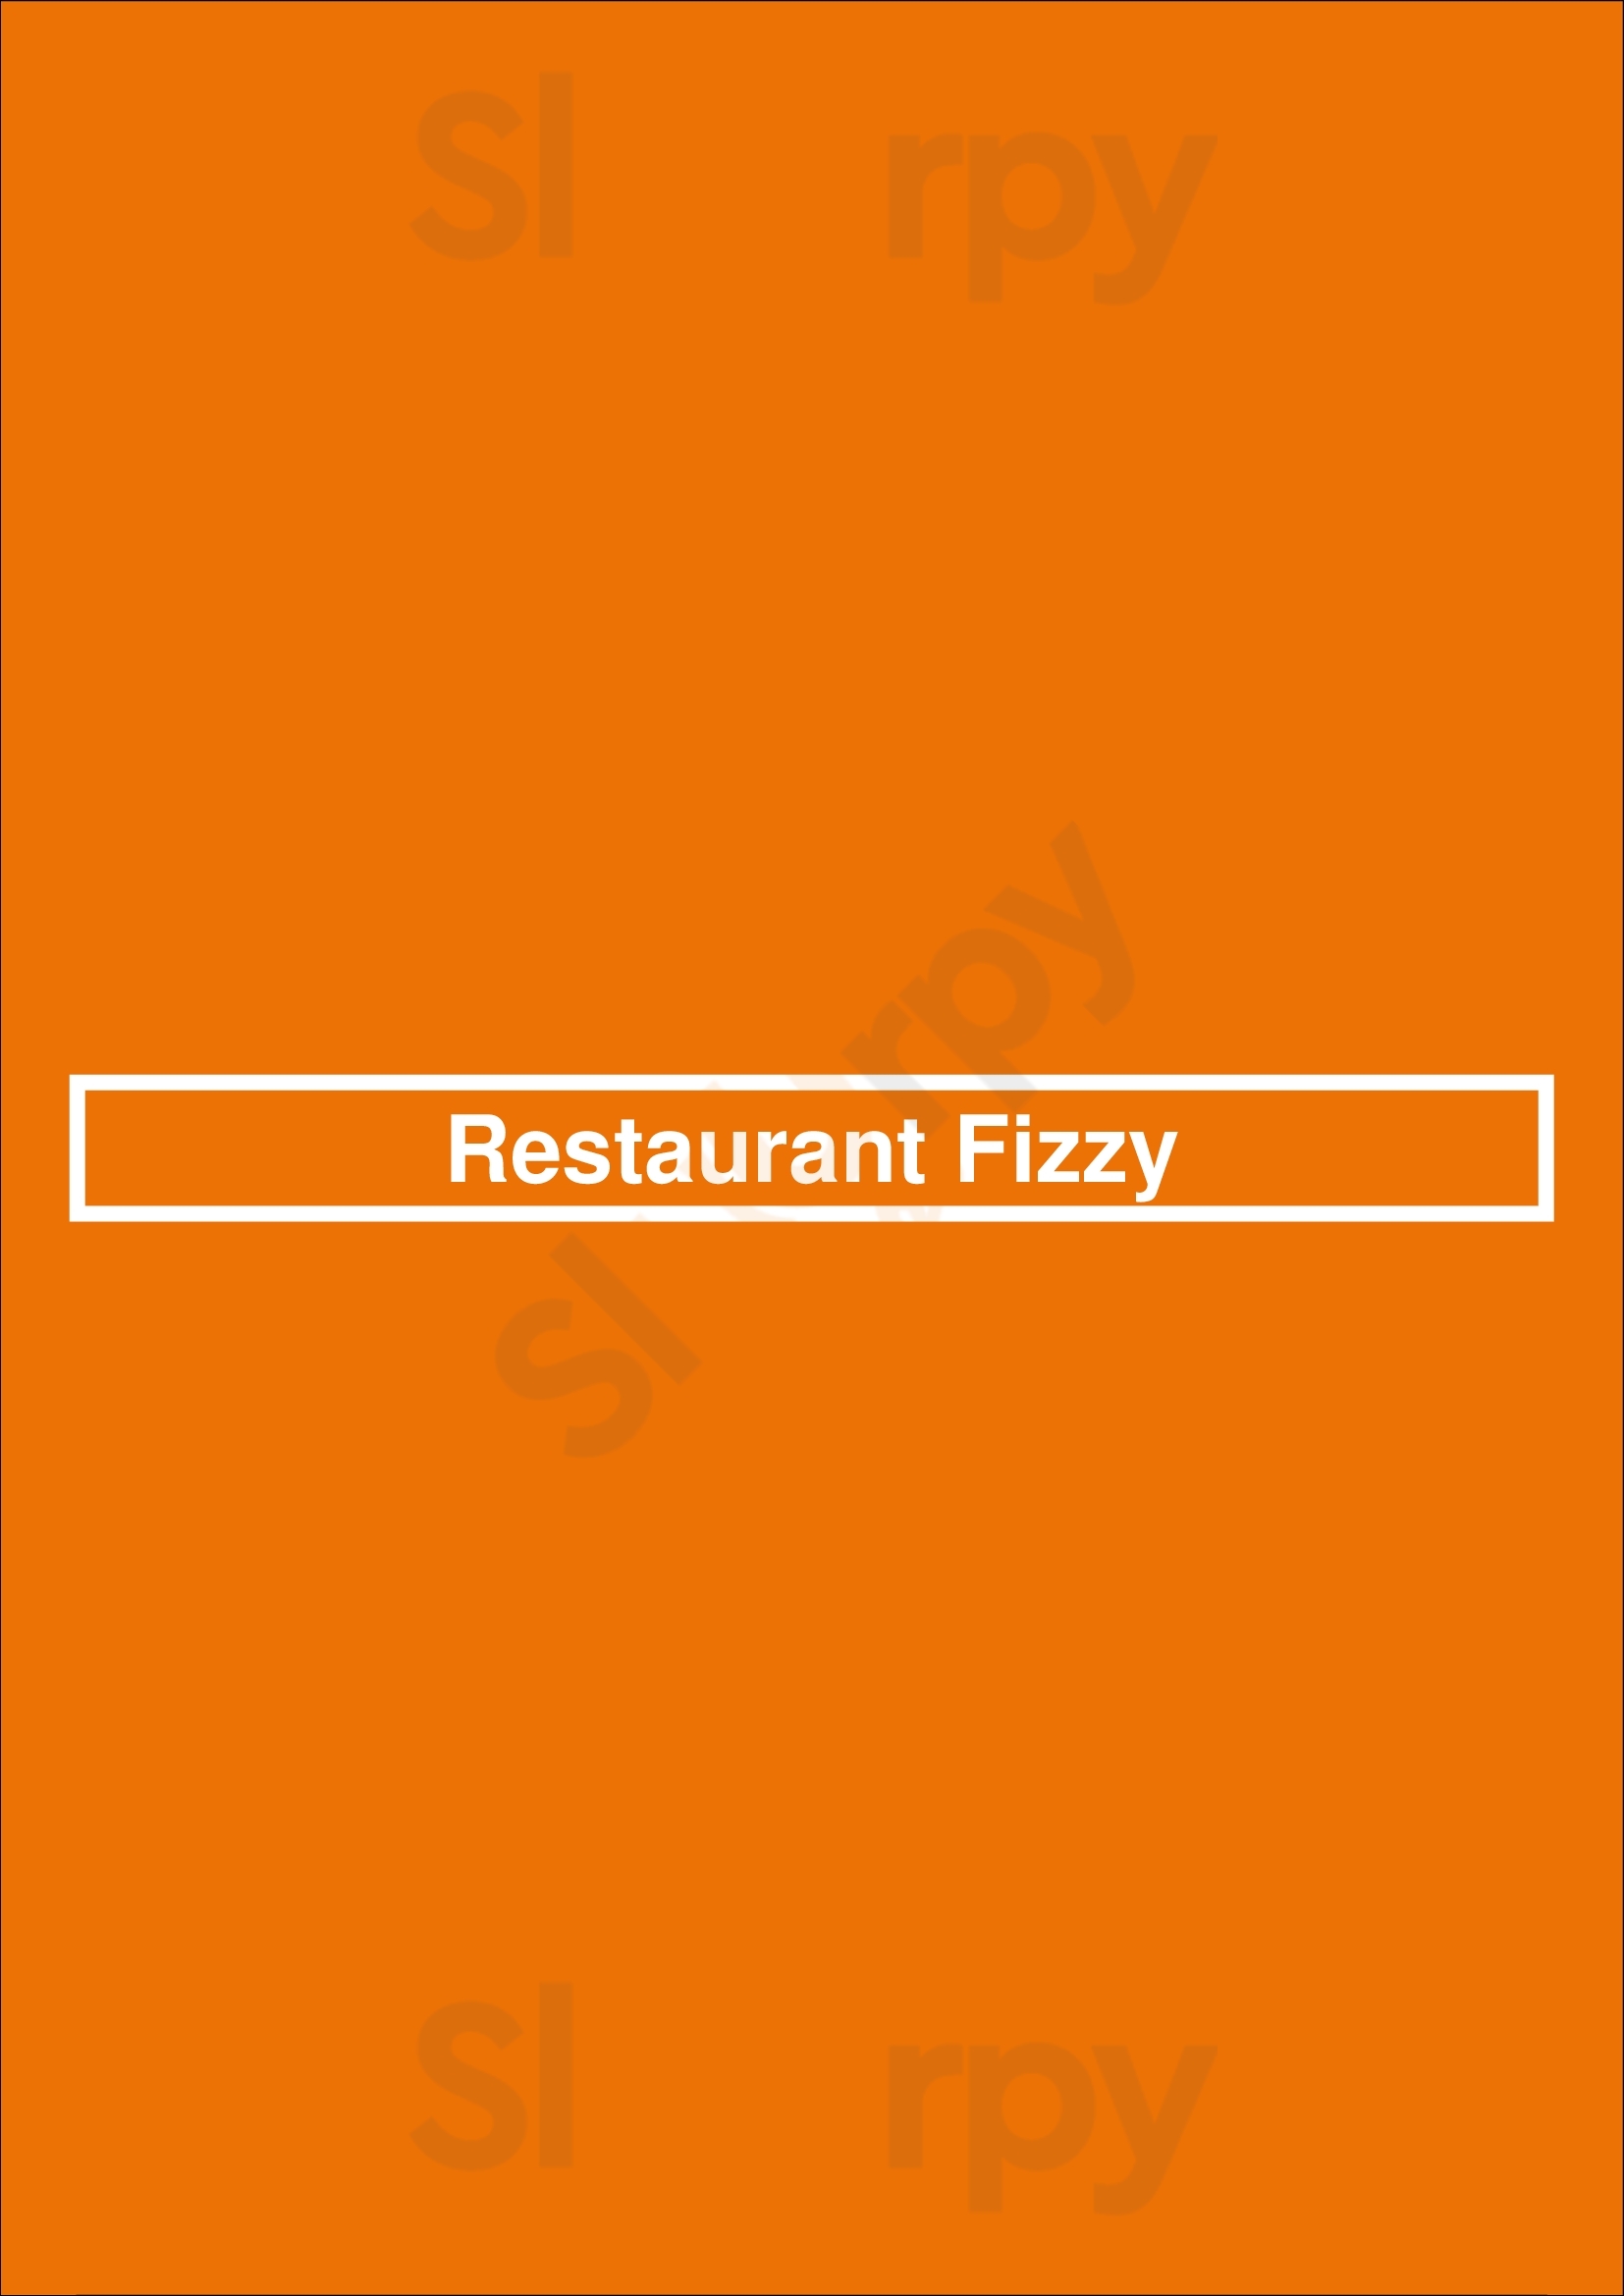 Restaurant Fizzy Epe Menu - 1